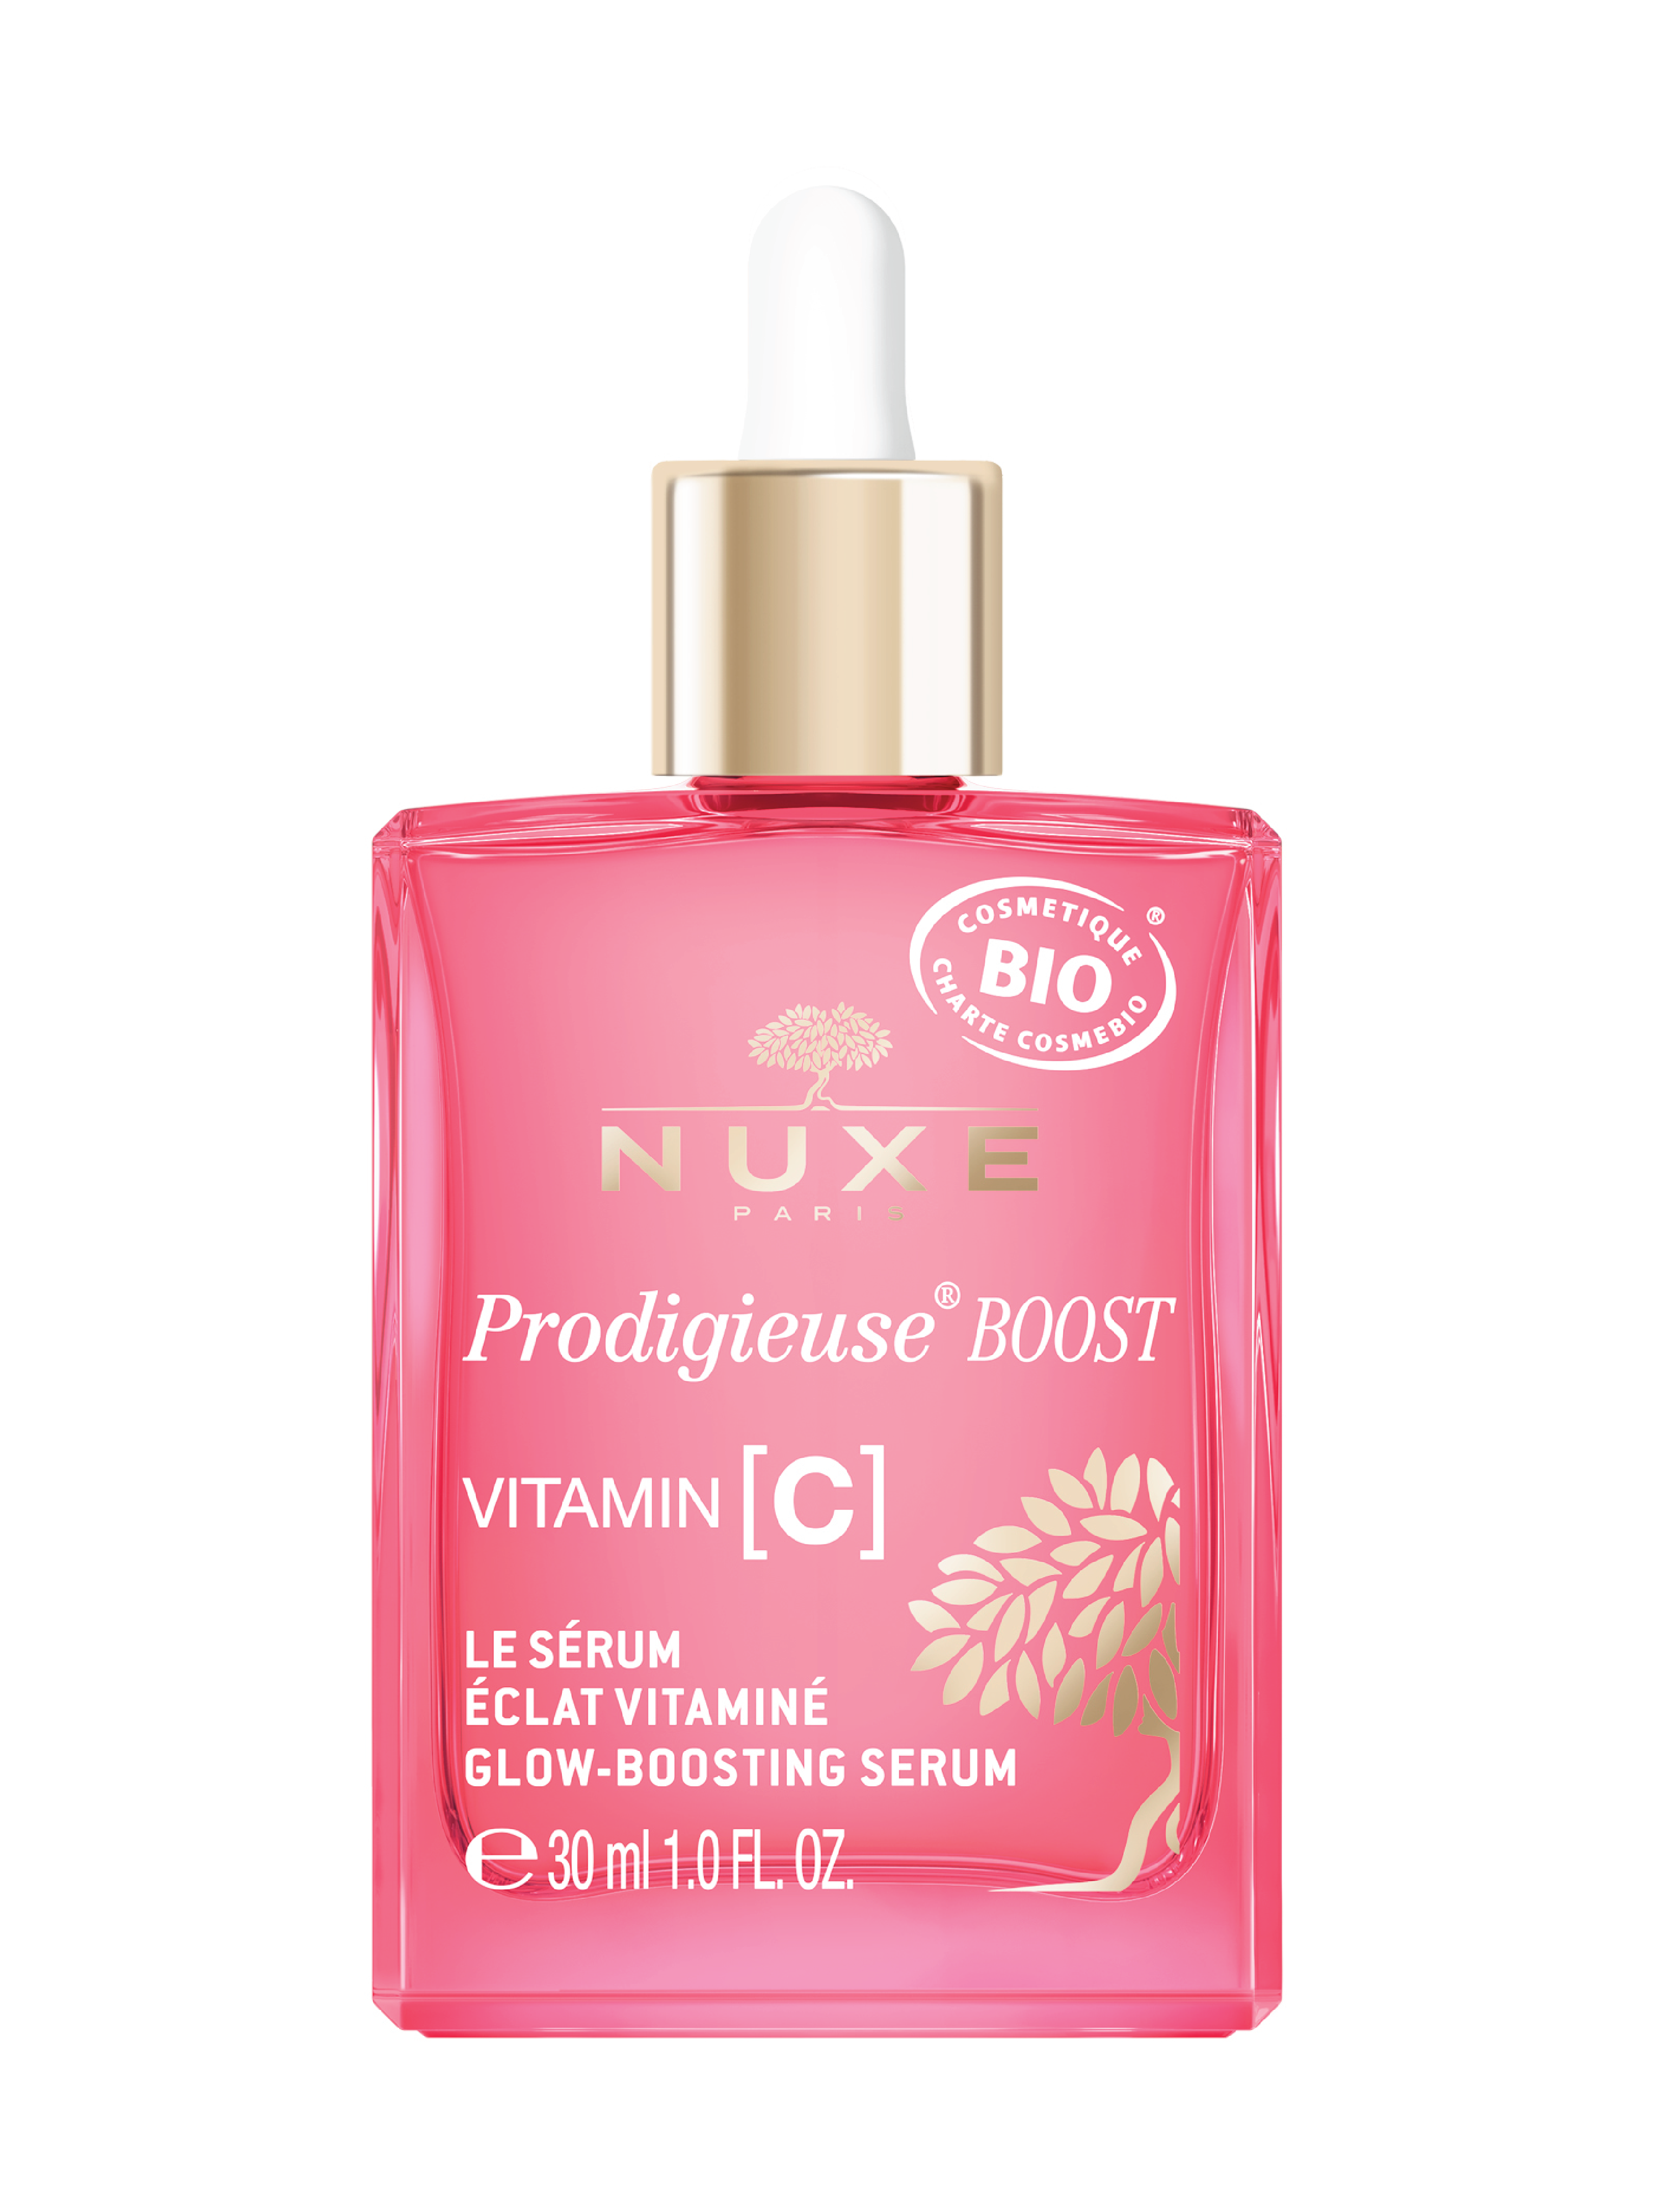 NUXE Prodigieuse Boost Glow-Boosting Serum, 30 ml